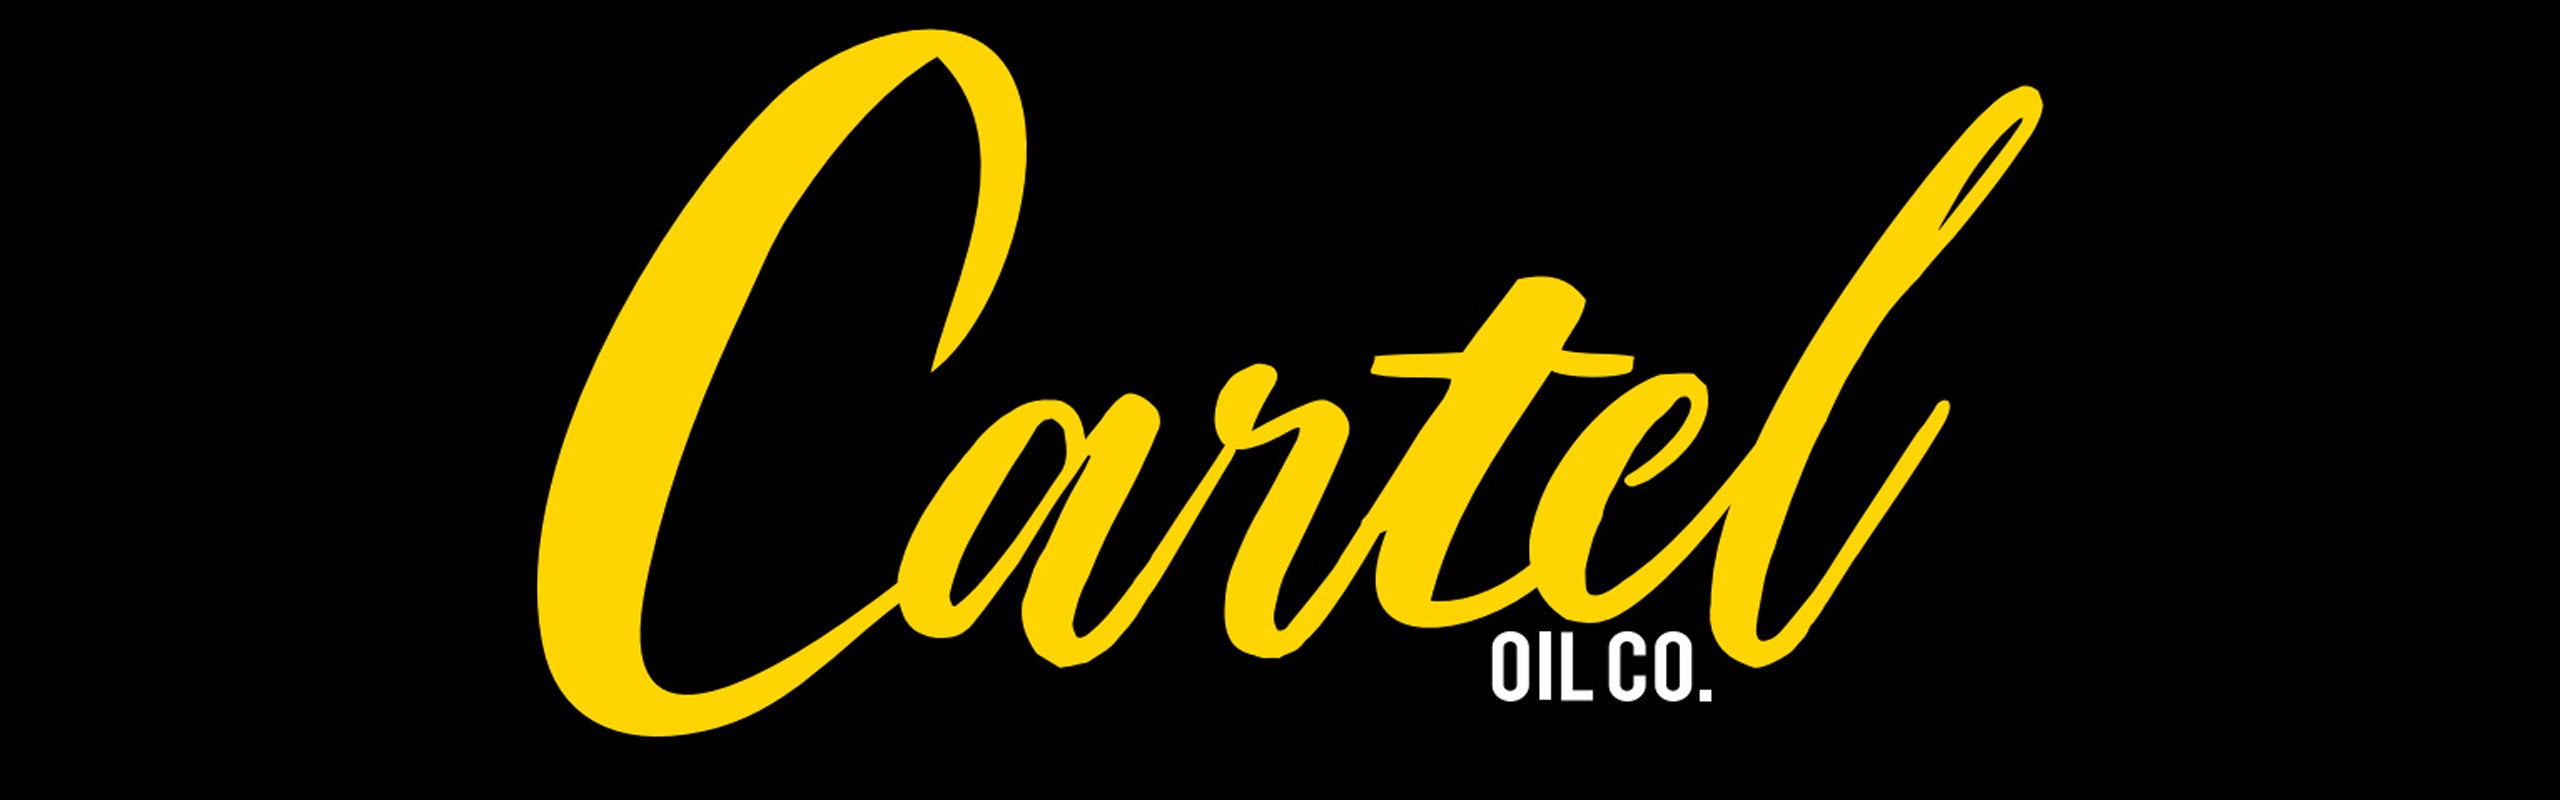 Cartel Oil Co banner